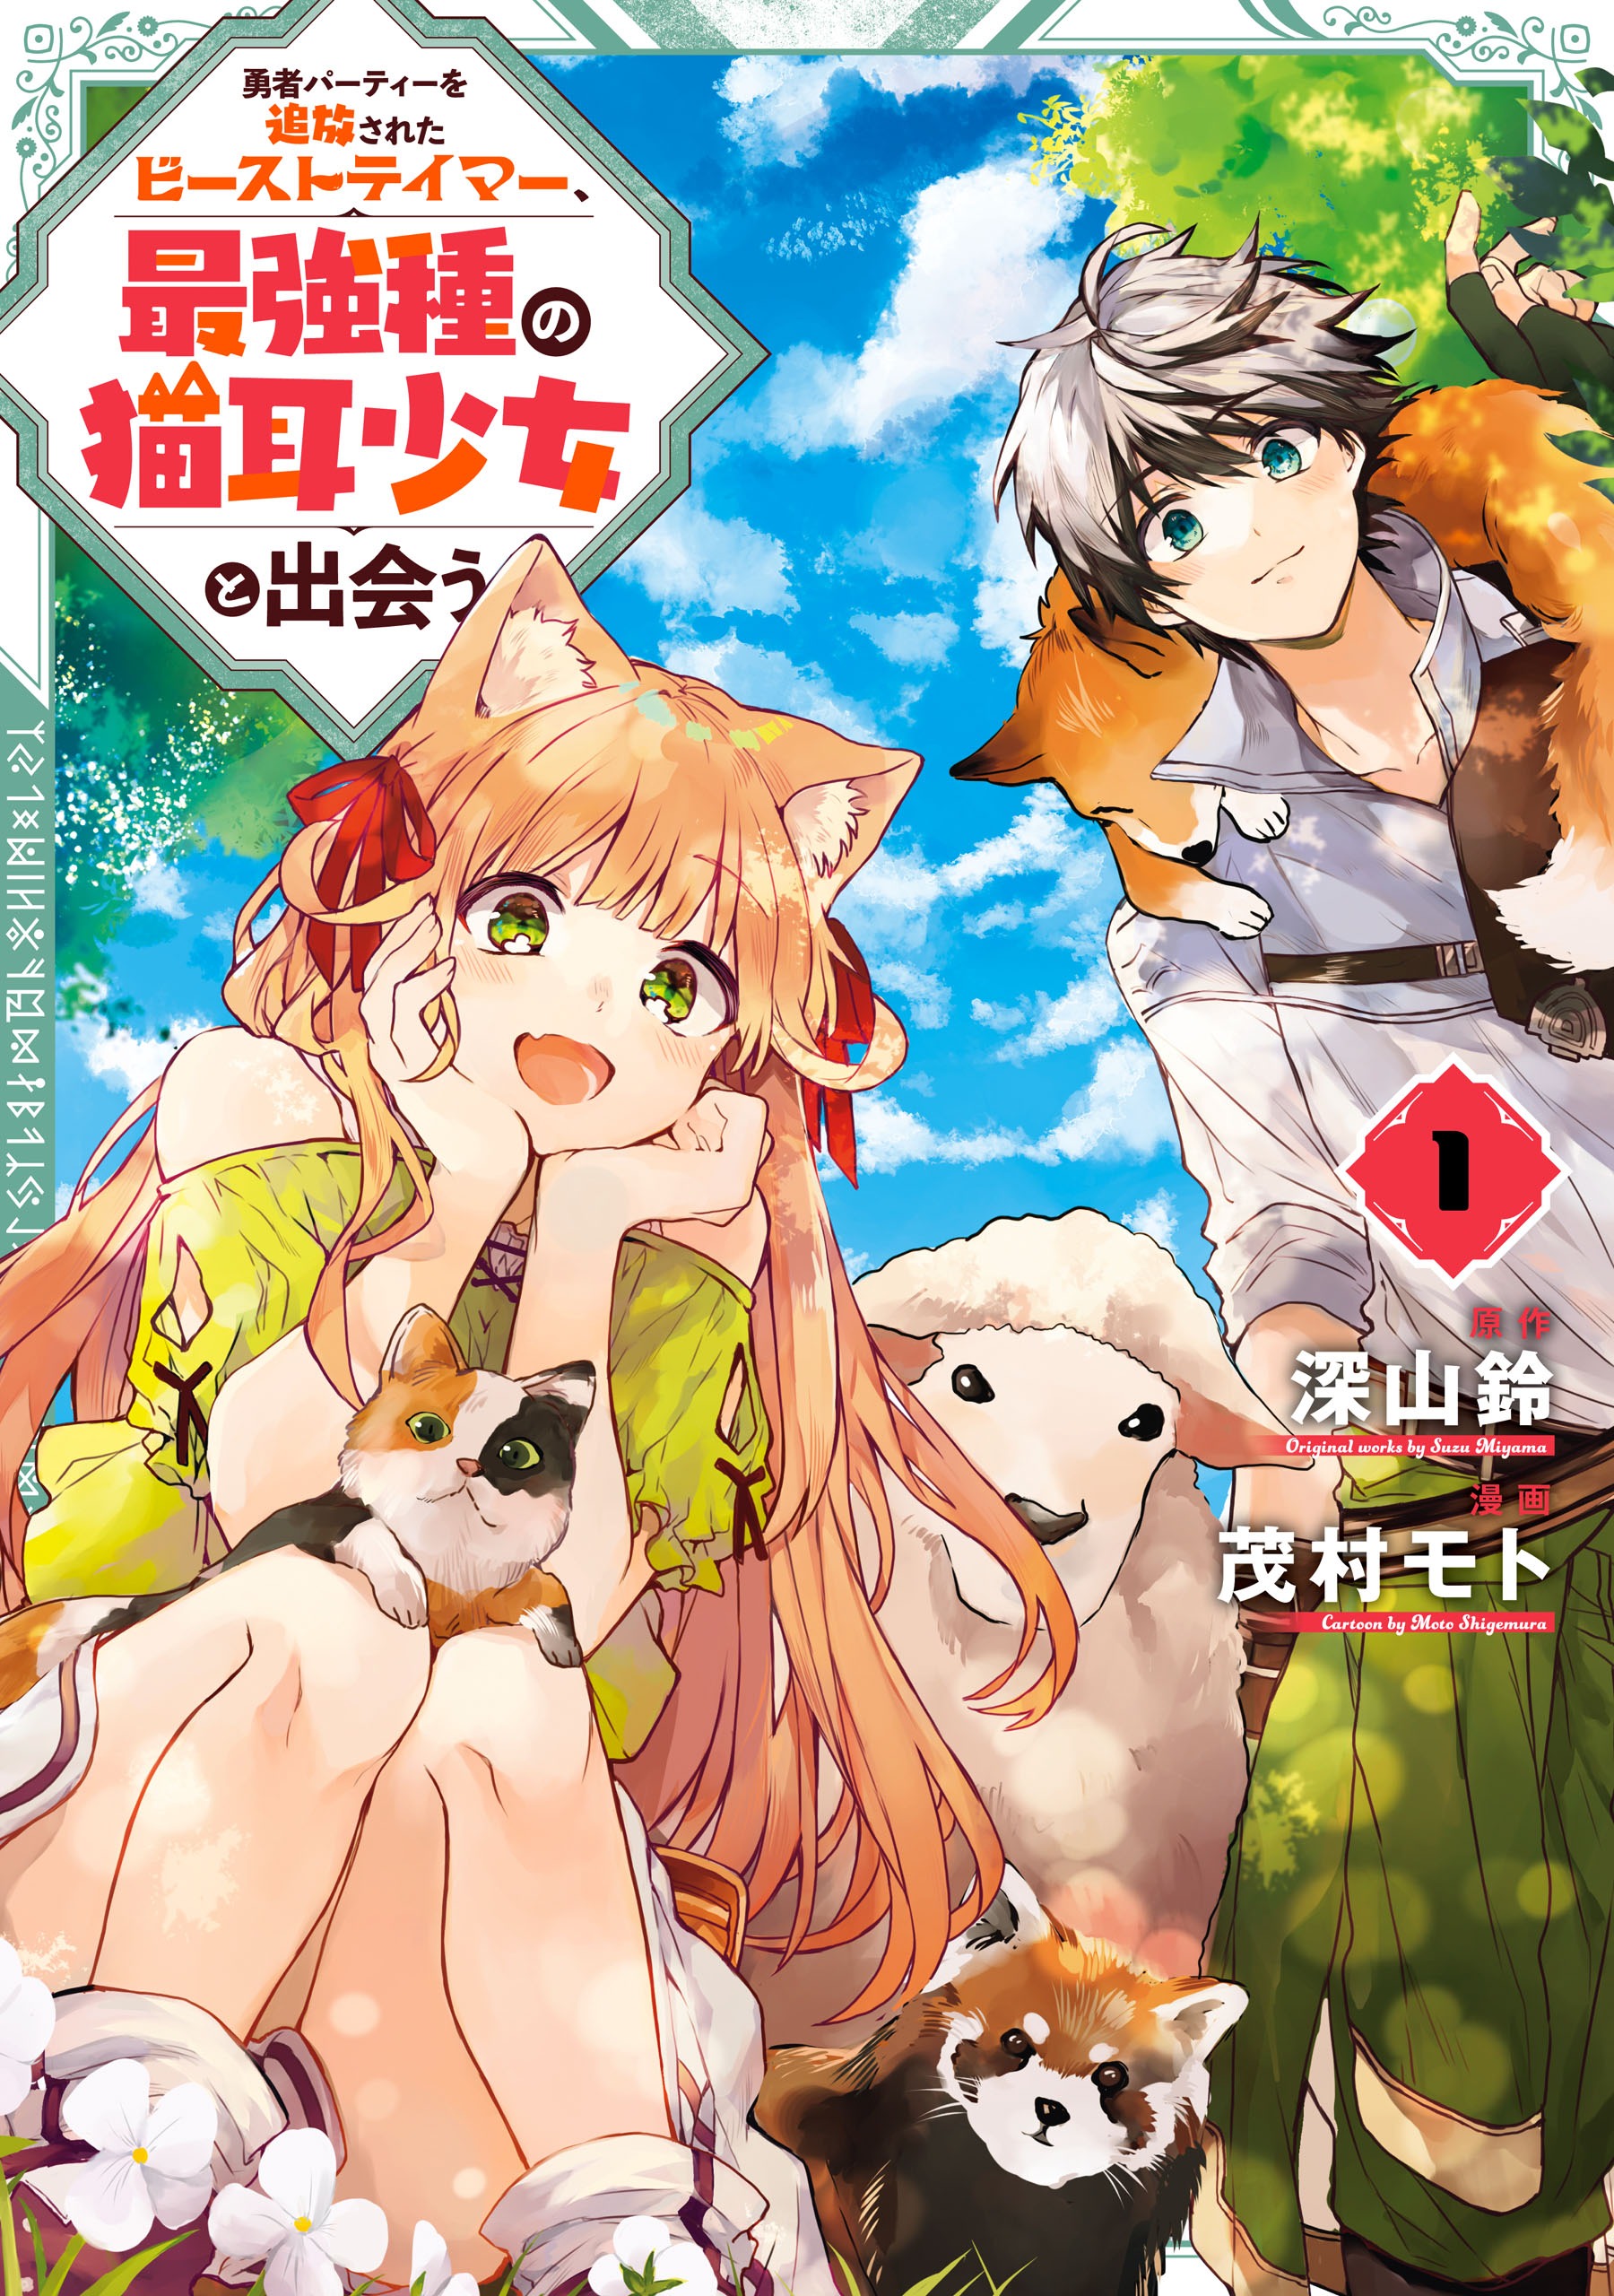 Disc] Yuusha Party wo Tsuihou Sareta Beast Tamer, Saikyou Shu Nekomimi  Shojo to Deau - Ch. 69 - Hero - MangaDex : r/manga